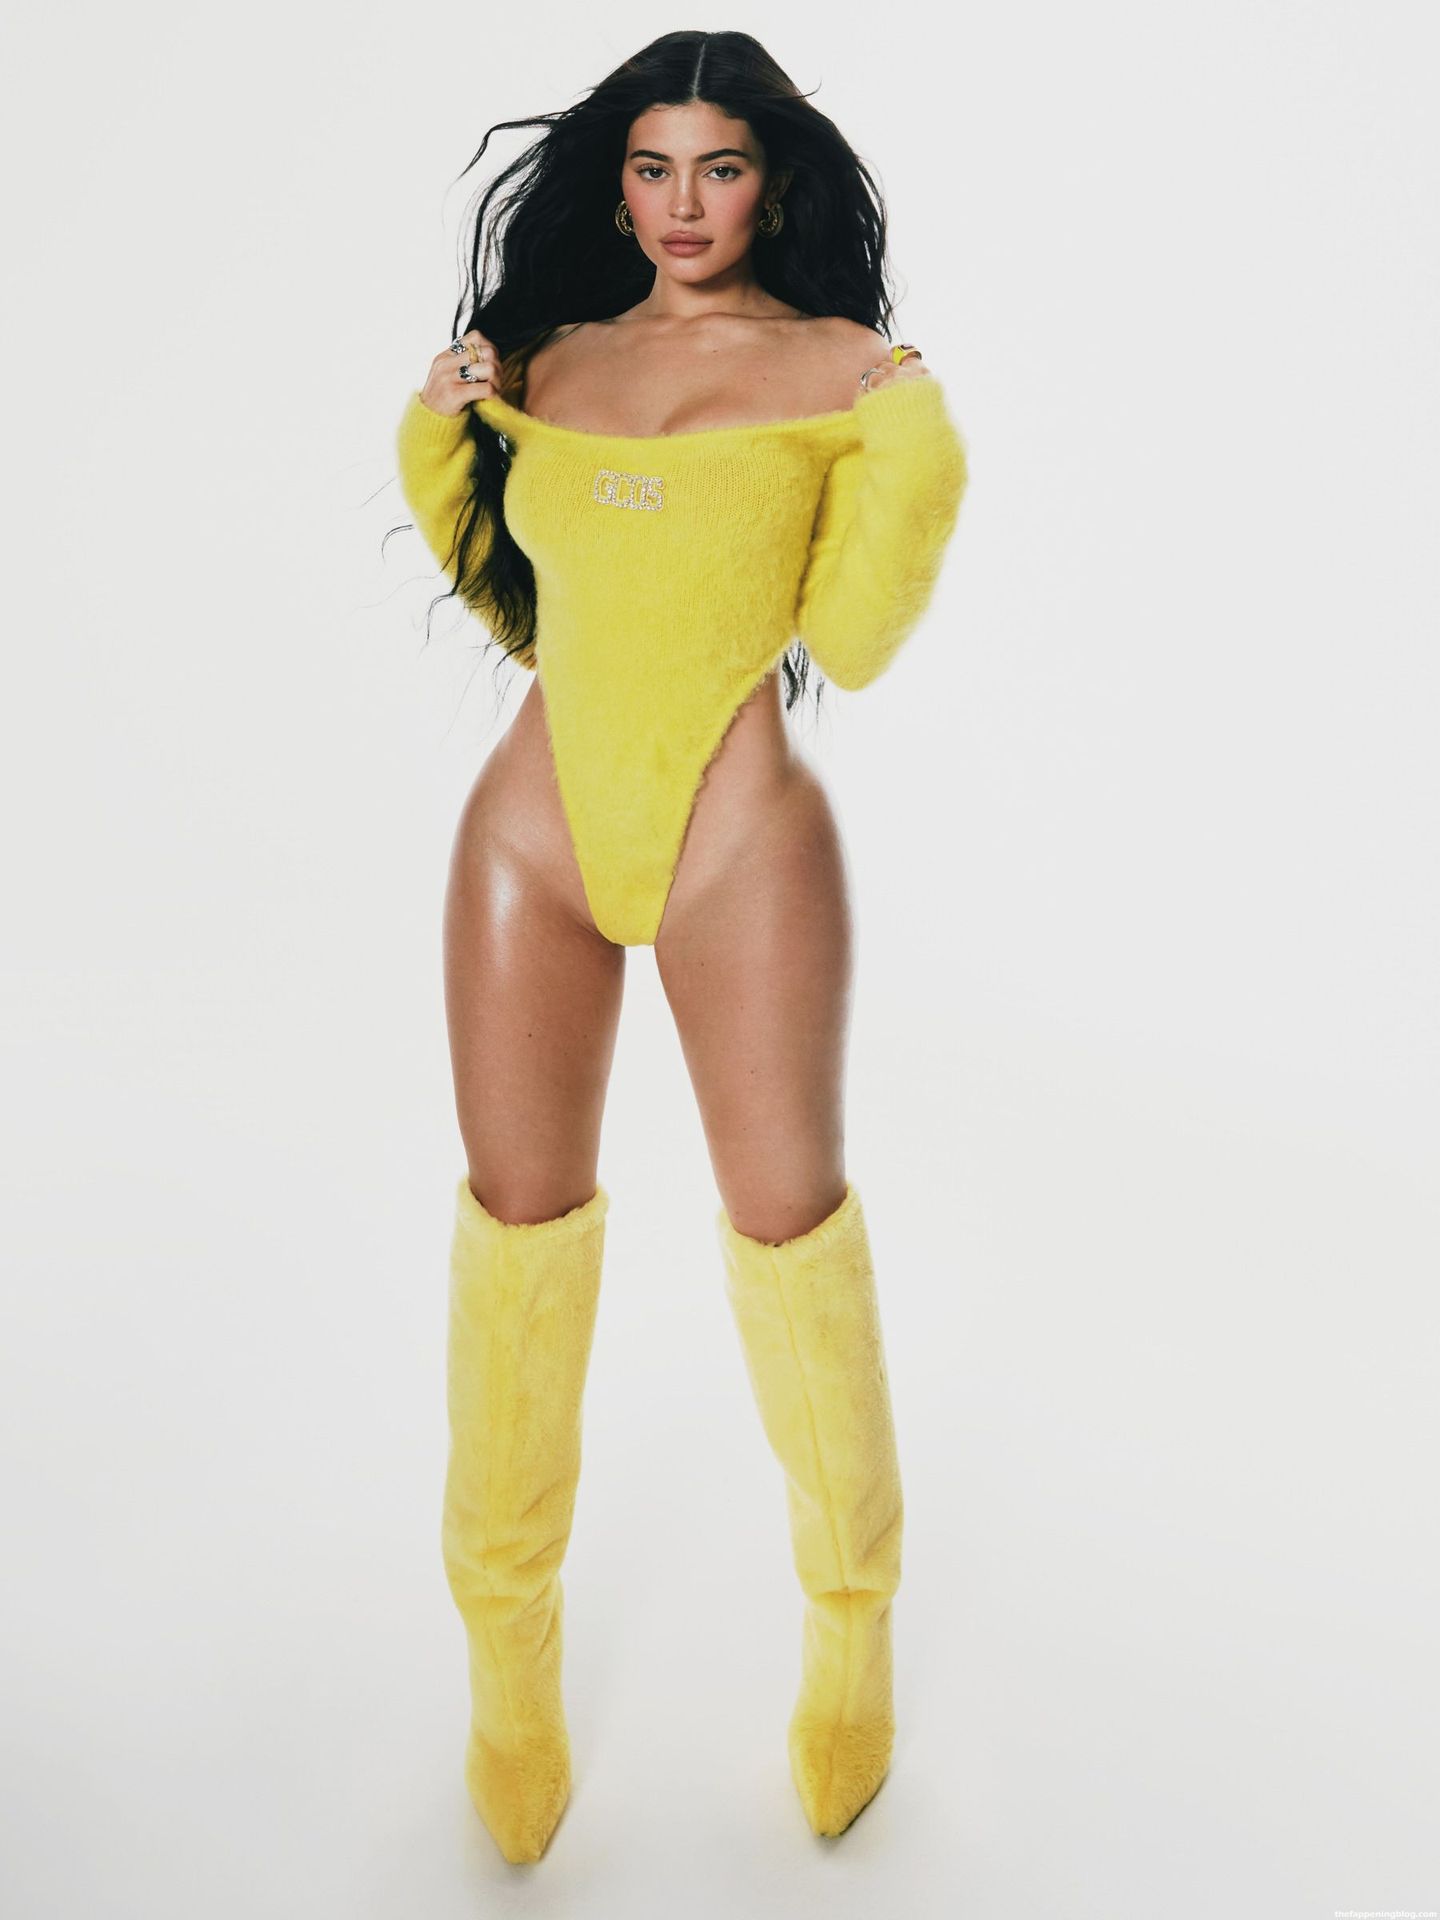 Kylie Jenner Sexy - Tmrw Magazine (73 Photos)